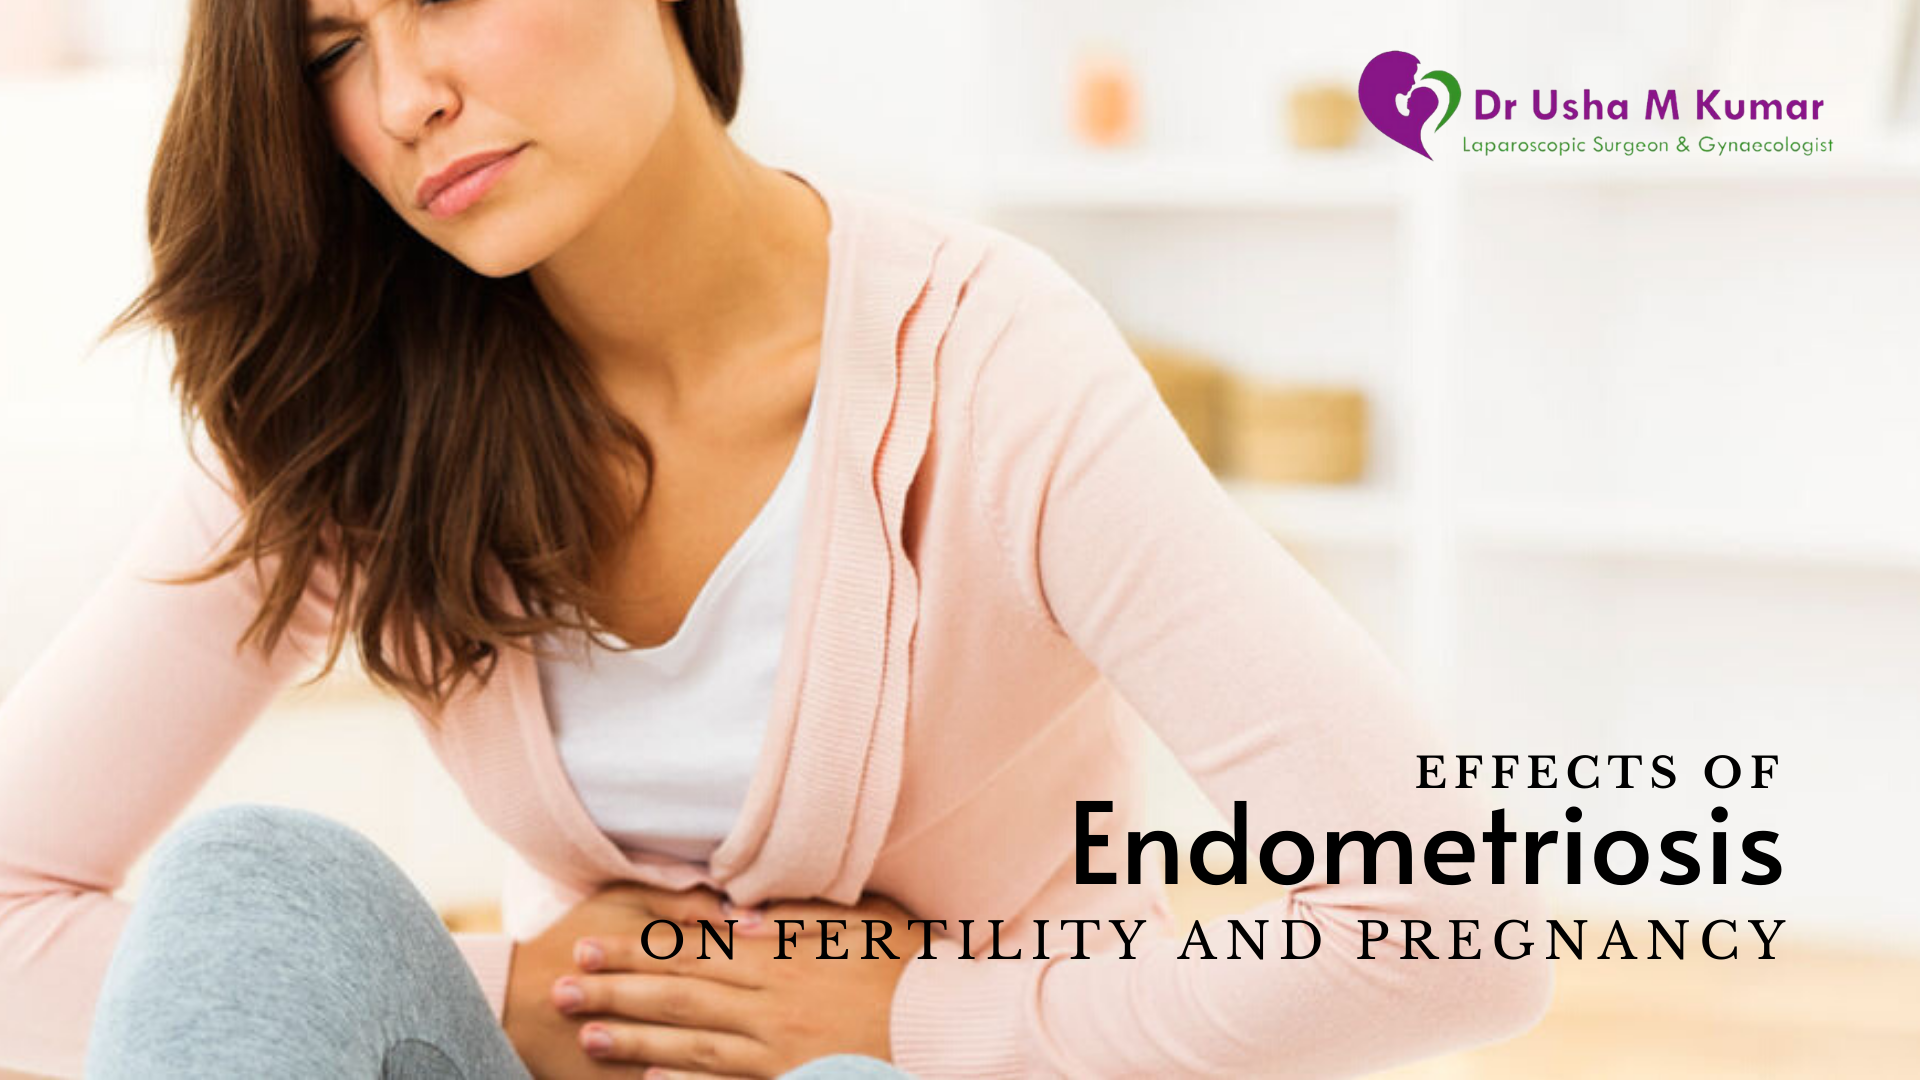 Best Gynecology Doctor in Delhi - Endometriosis, Fertility, and Pregnancy